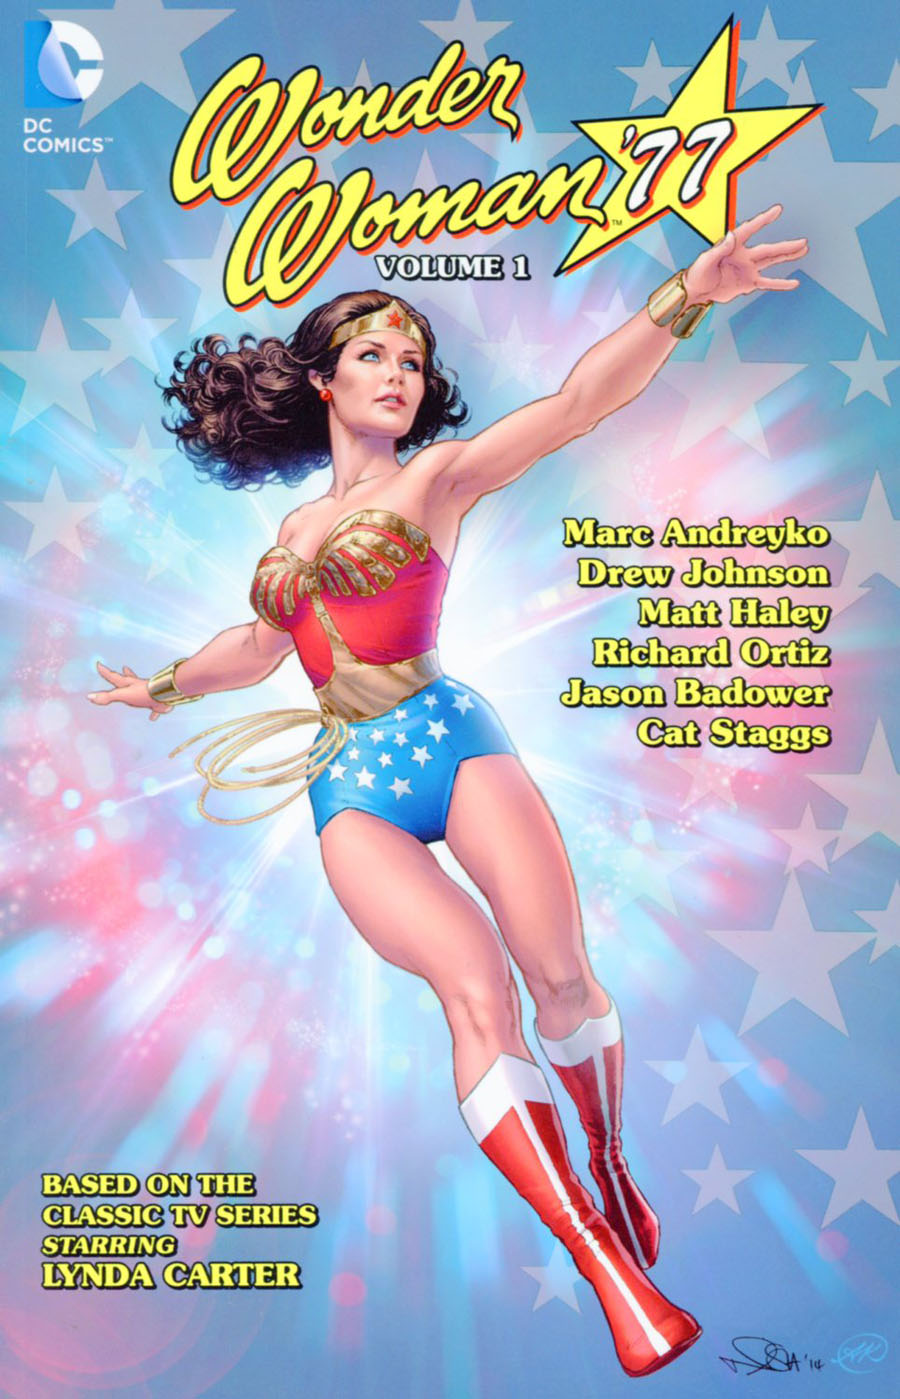 Wonder Woman 77 Vol 1 TP